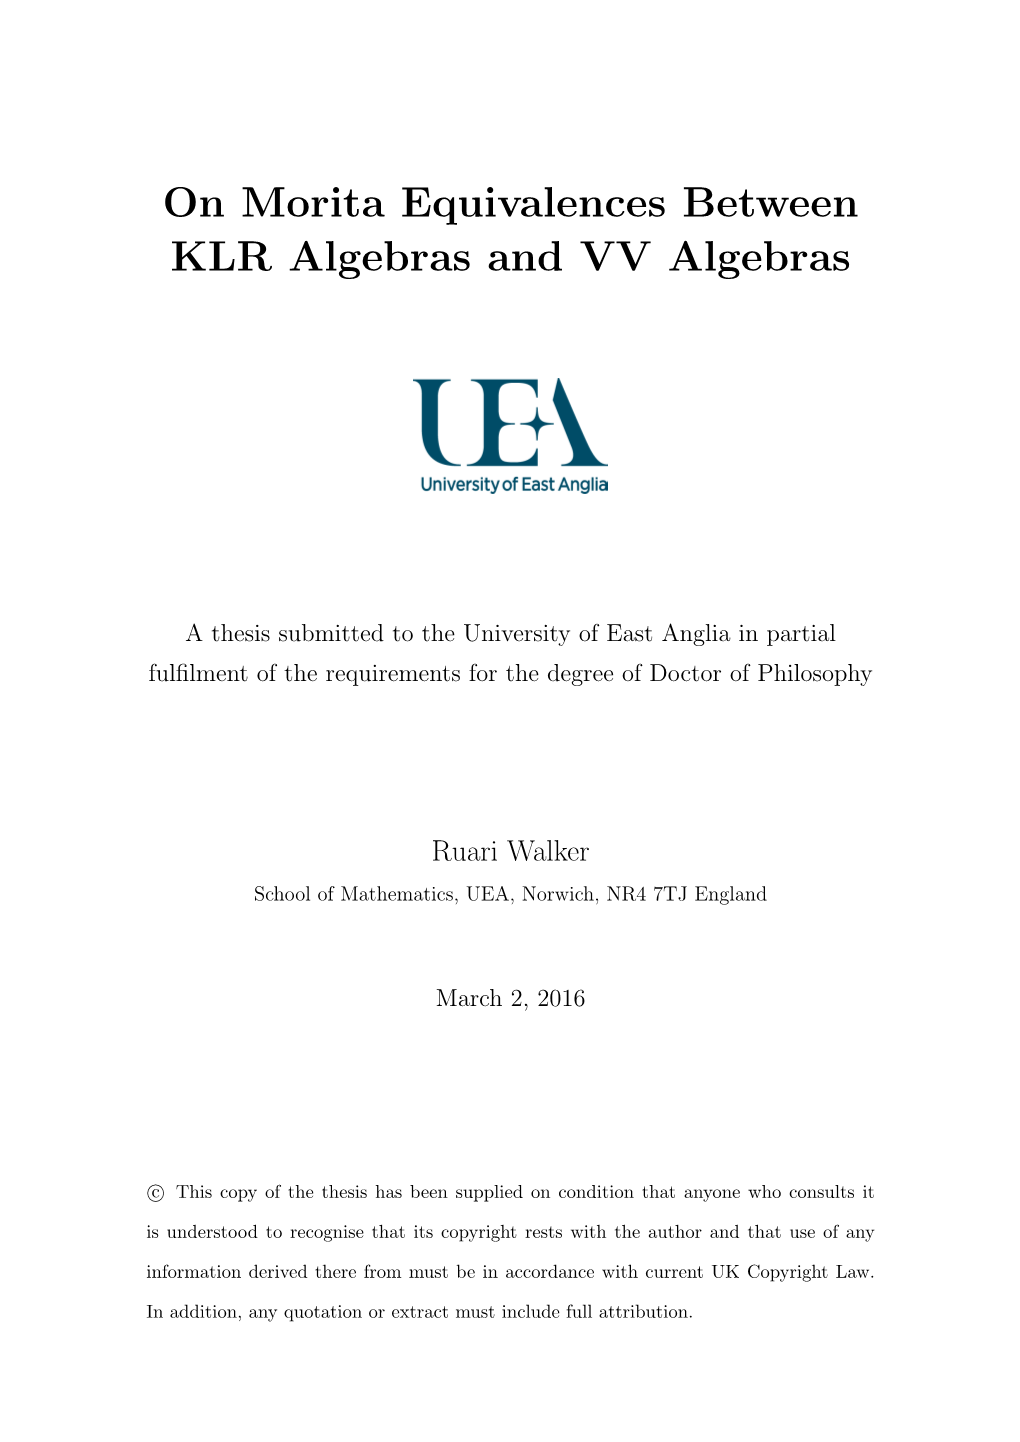 On Morita Equivalences Between KLR Algebras and VV Algebras